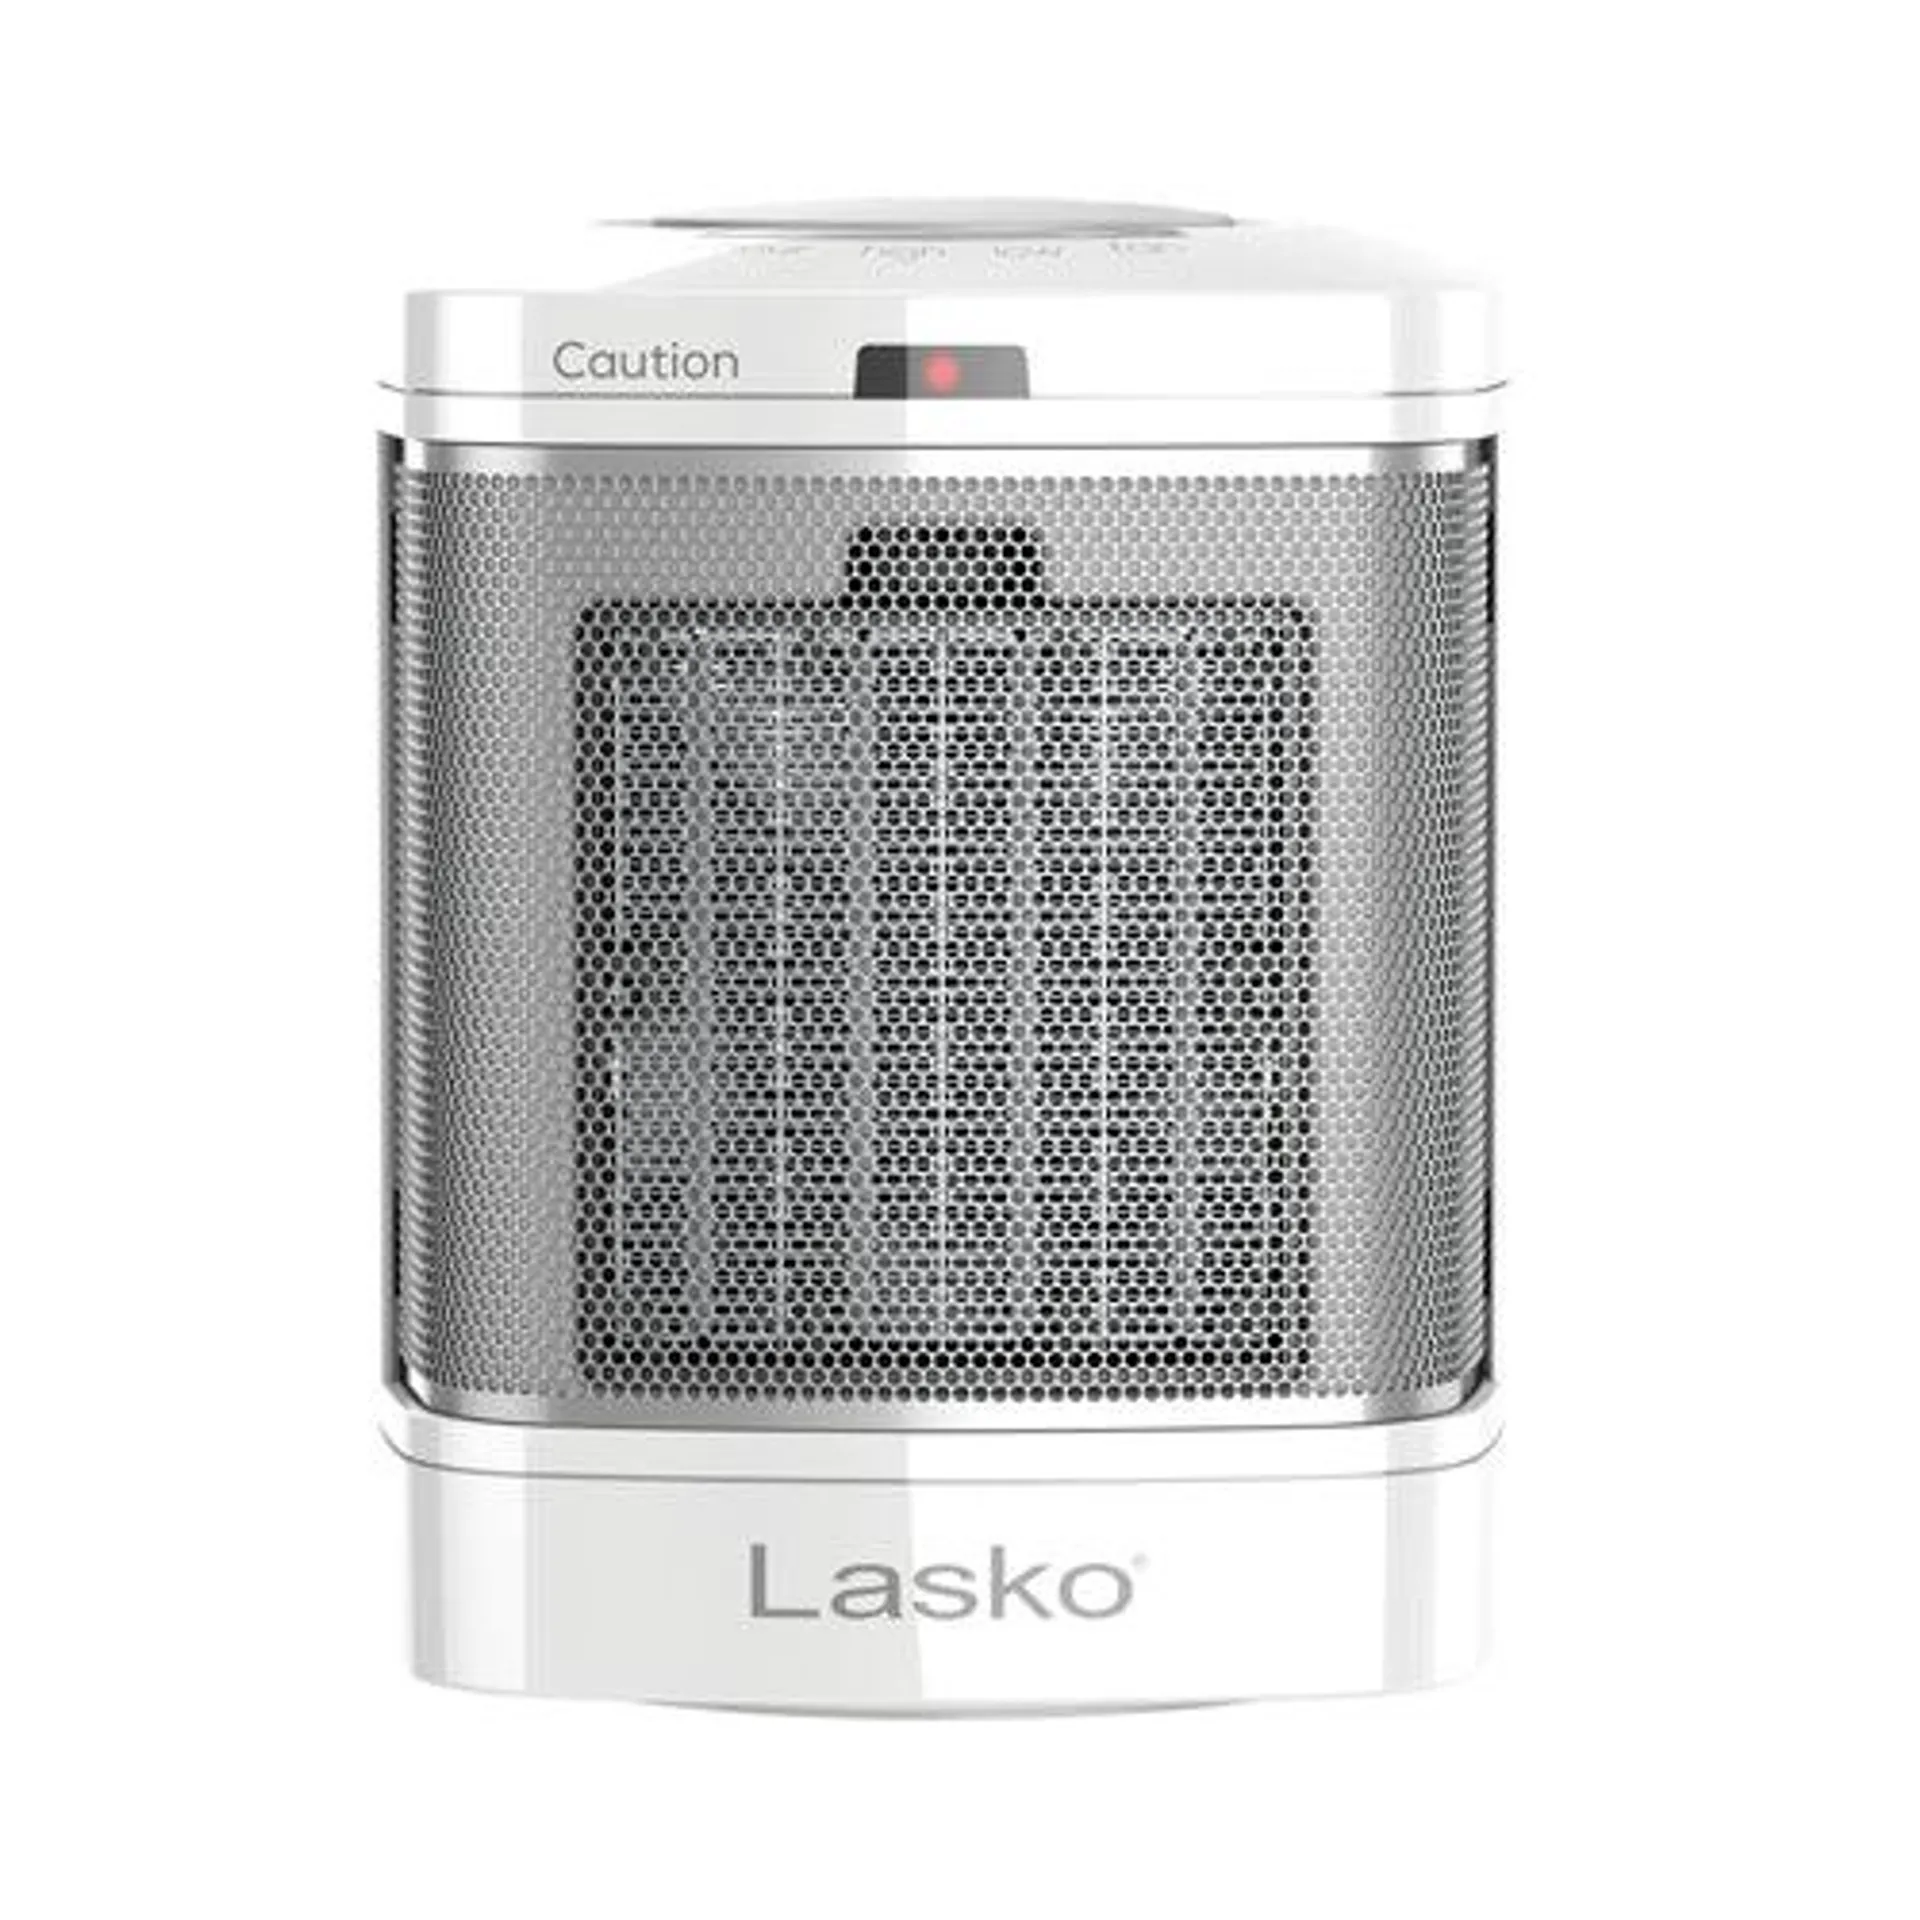 Lasko Ceramic Bathroom Space Heater with Fan